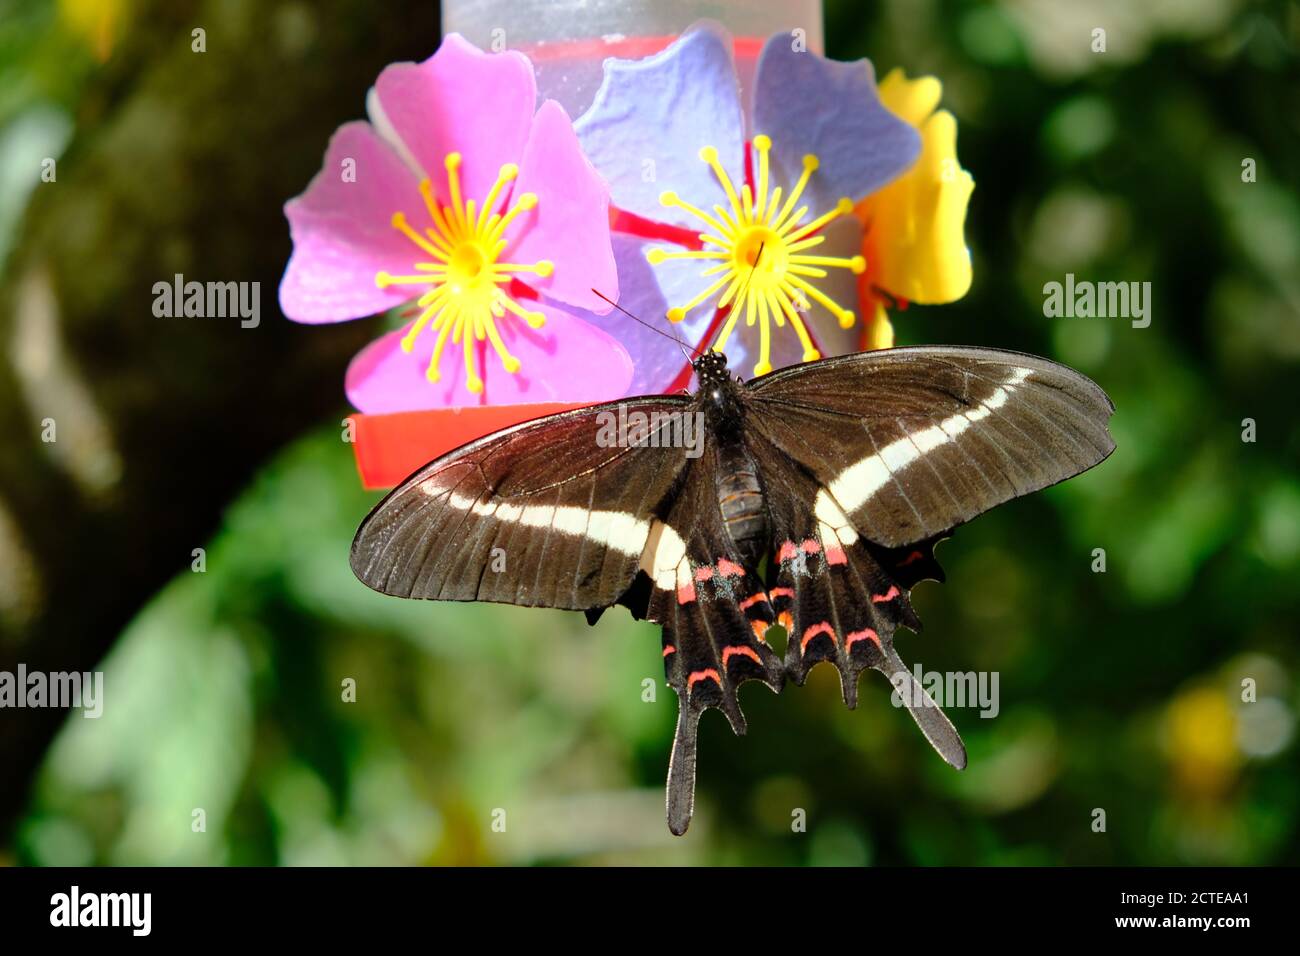 Brasil Foz do Iguacu - Zoo - Parque das aves Alimente a la mariposa con néctar Foto de stock